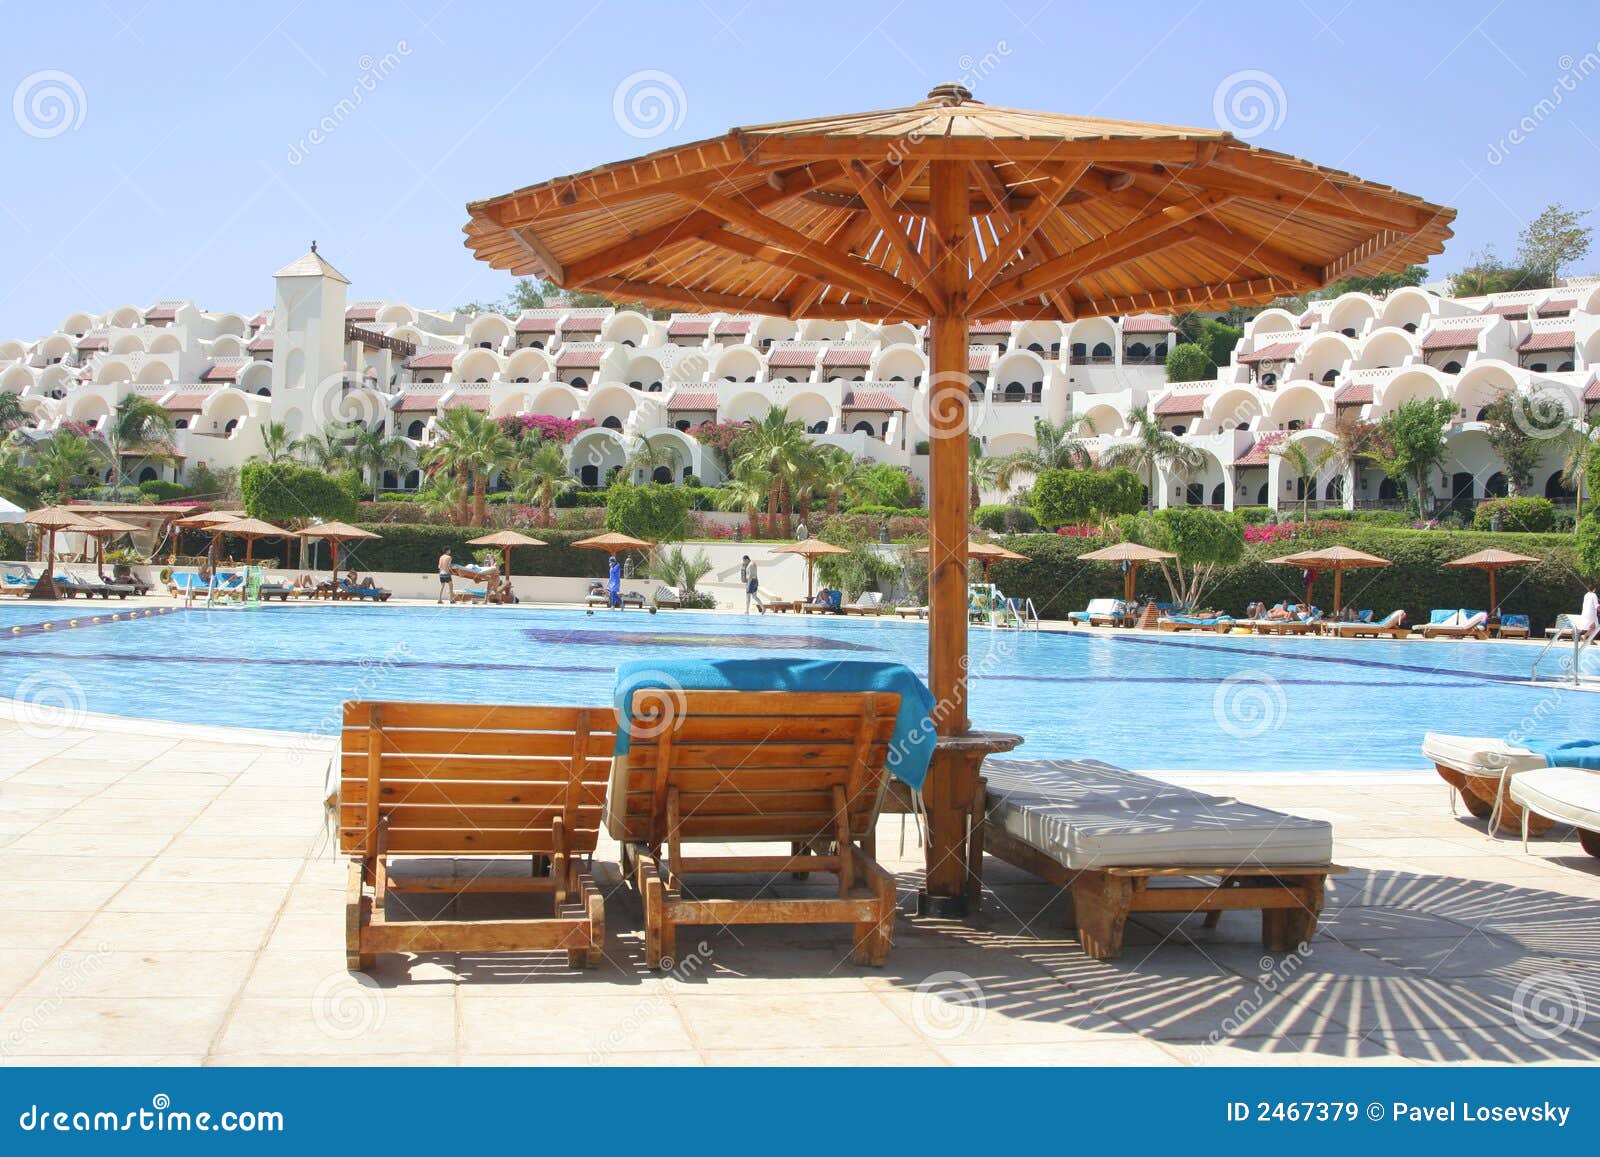 sunshade and hotel pool